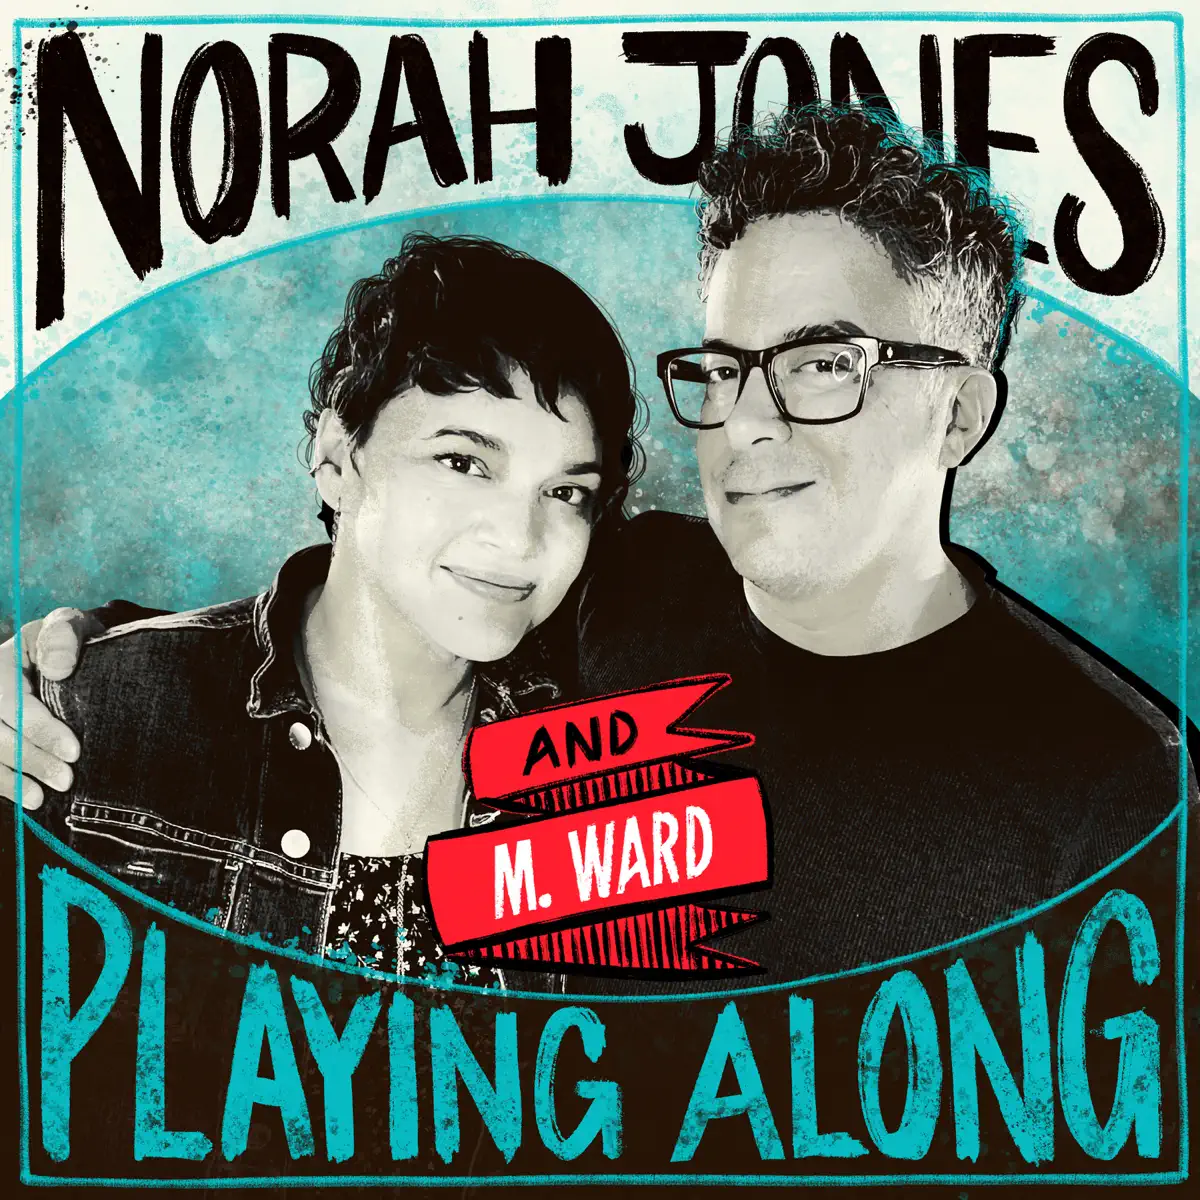 Norah Jones - Lifeline (From “Norah Jones is Playing Along” Podcast) [feat. M. Ward] - Single (2023) [iTunes Plus AAC M4A]-新房子